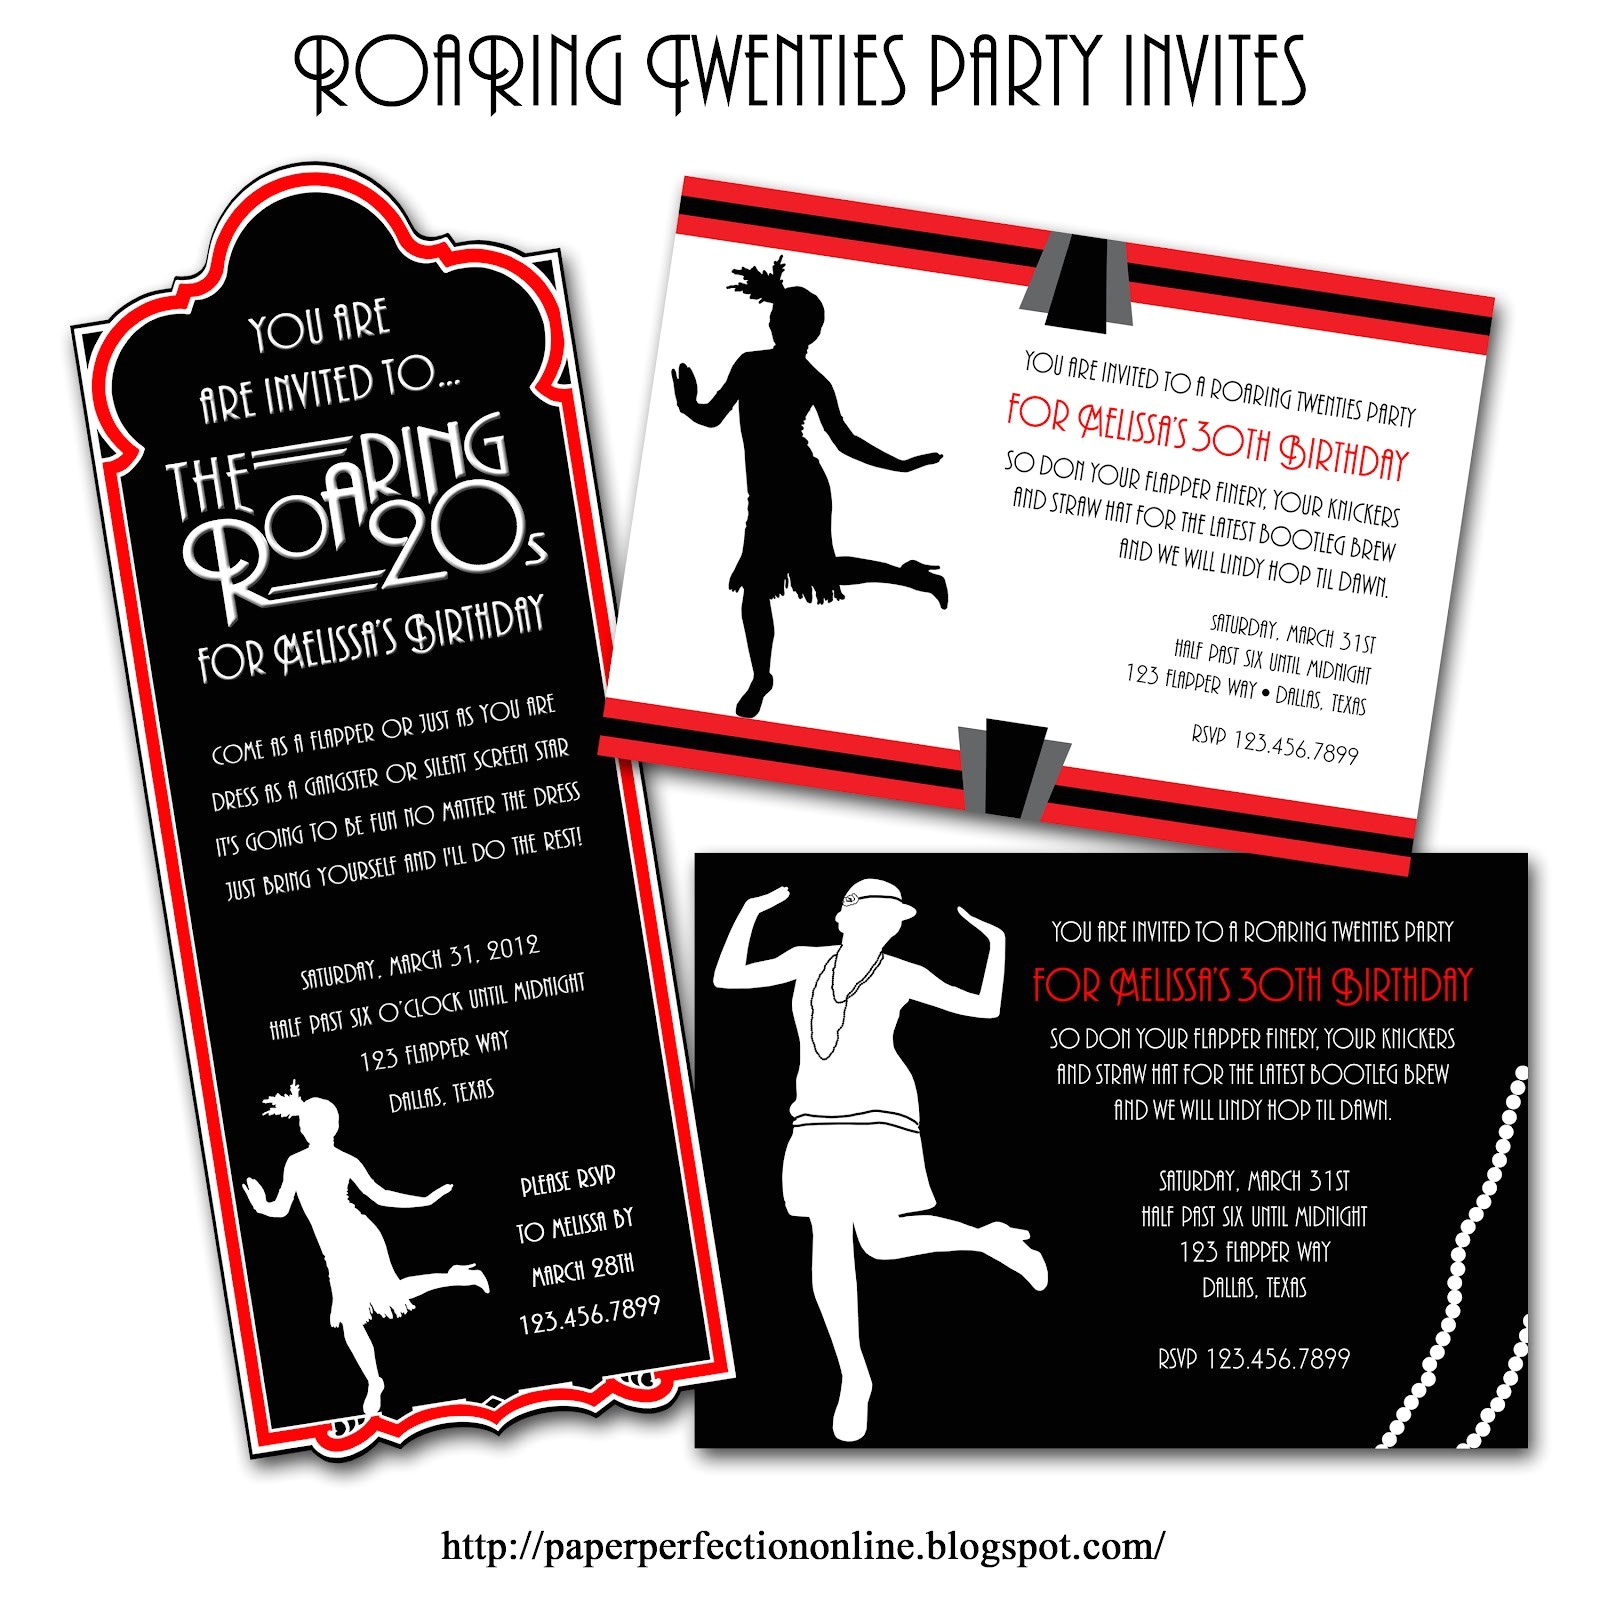 1920s Style Party Invitations Speakeasy Prohibition theme On Pinterest